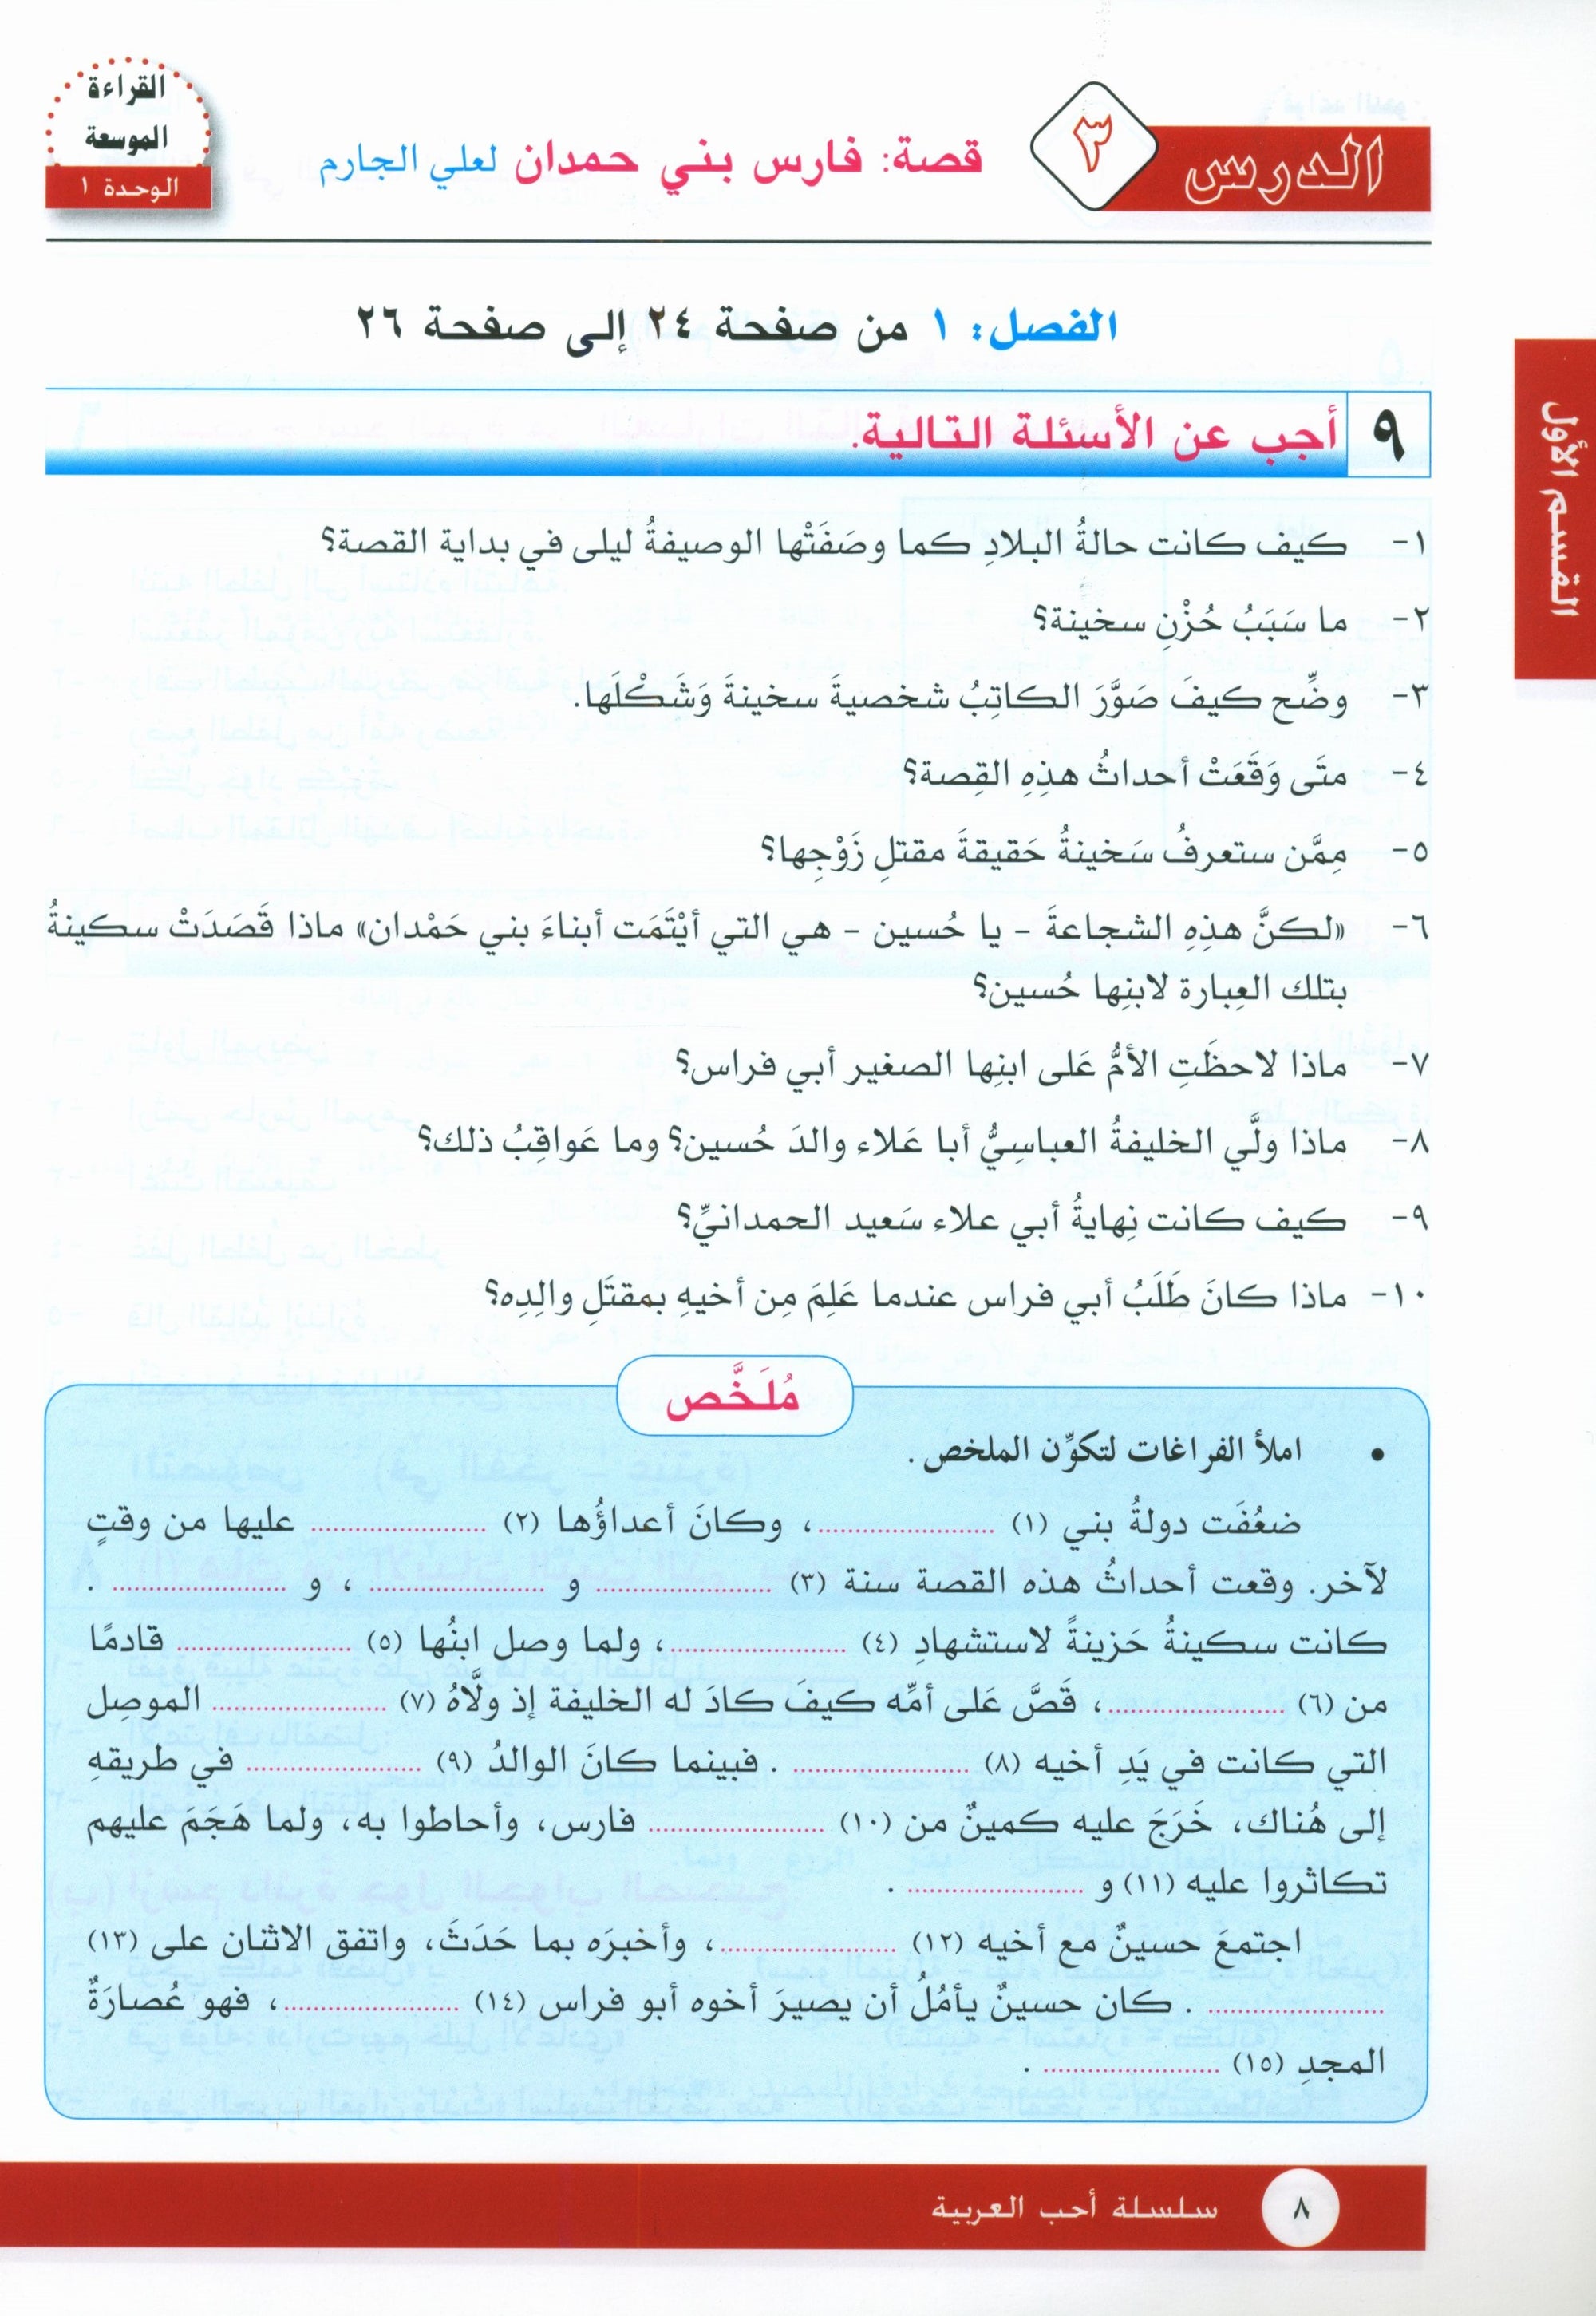 I Love Arabic Workbook Level 12 أحب العربية كتاب التدريبات